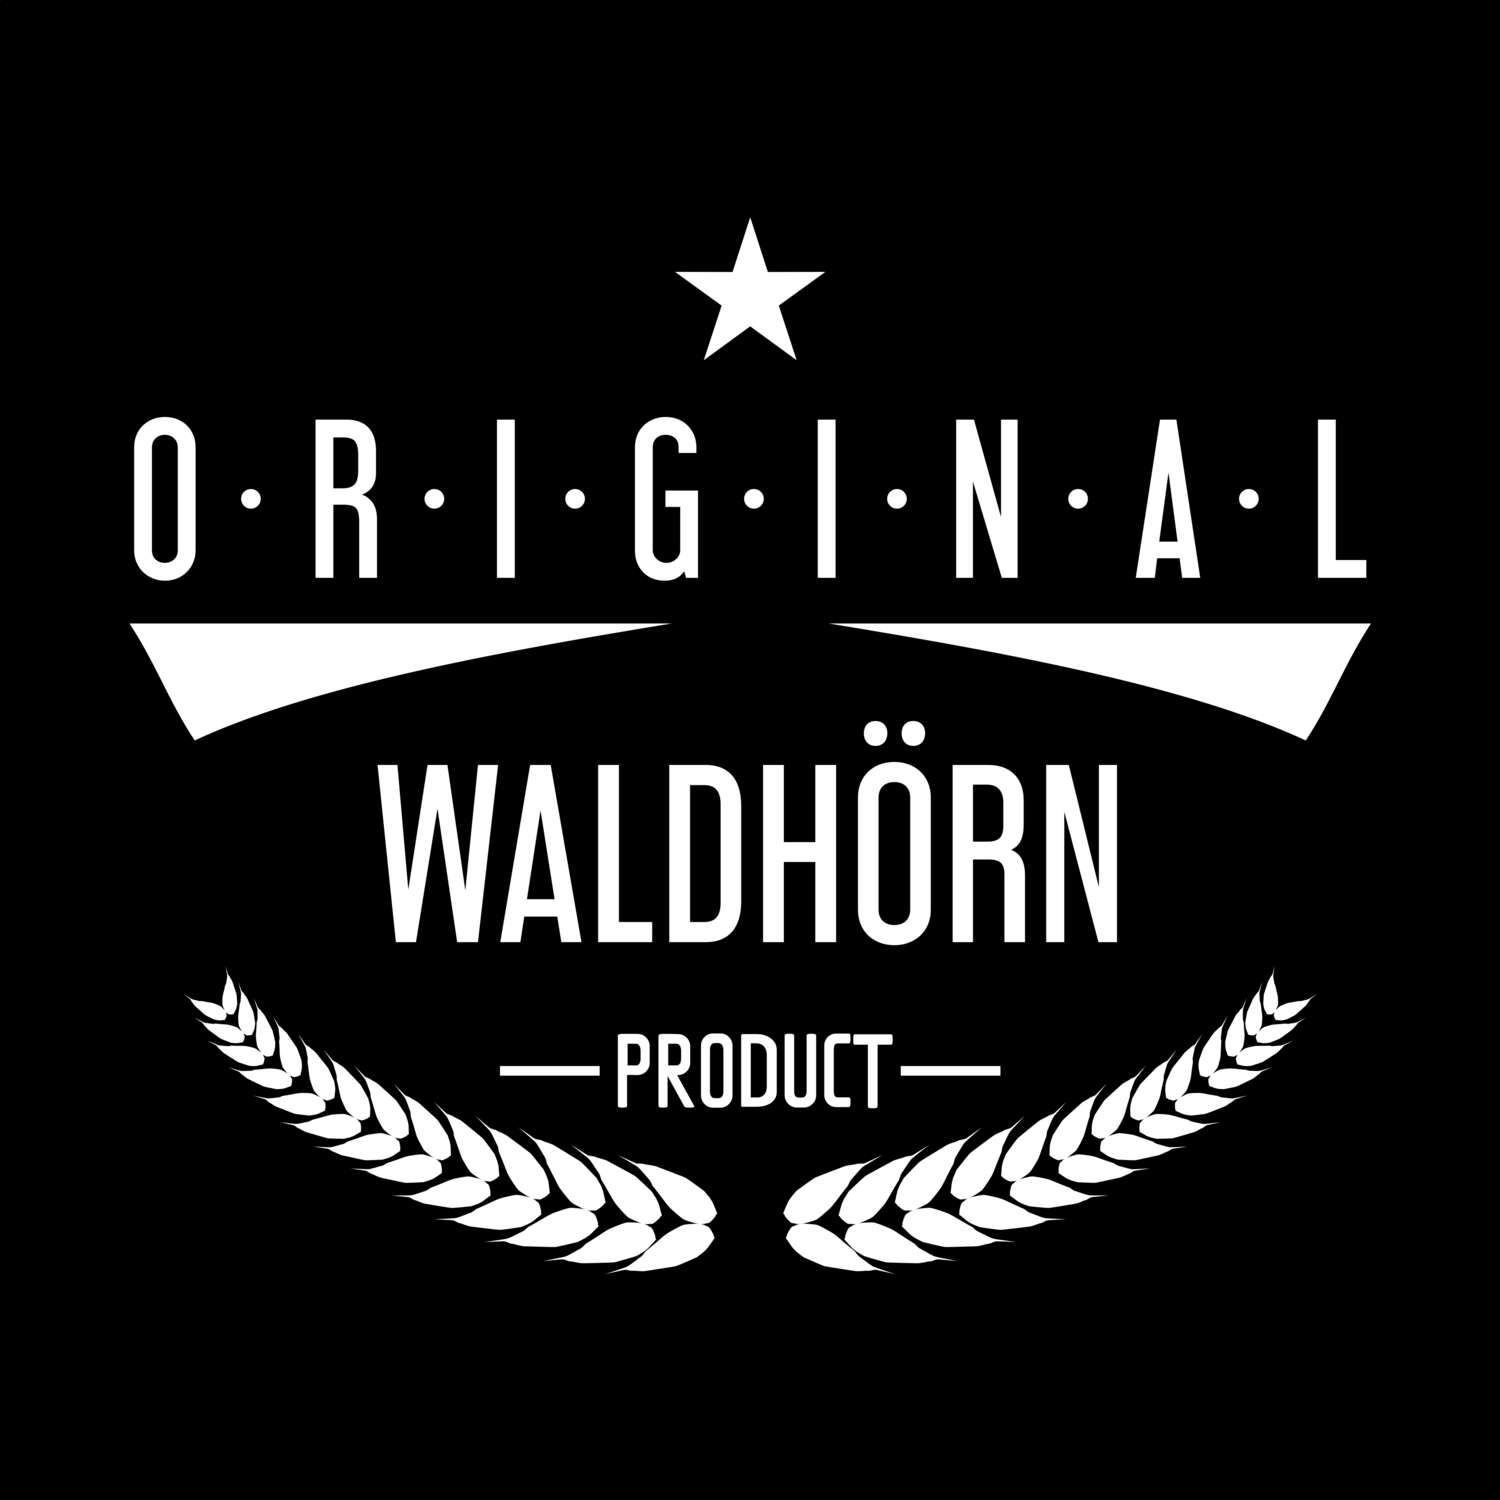 Waldhörn T-Shirt »Original Product«